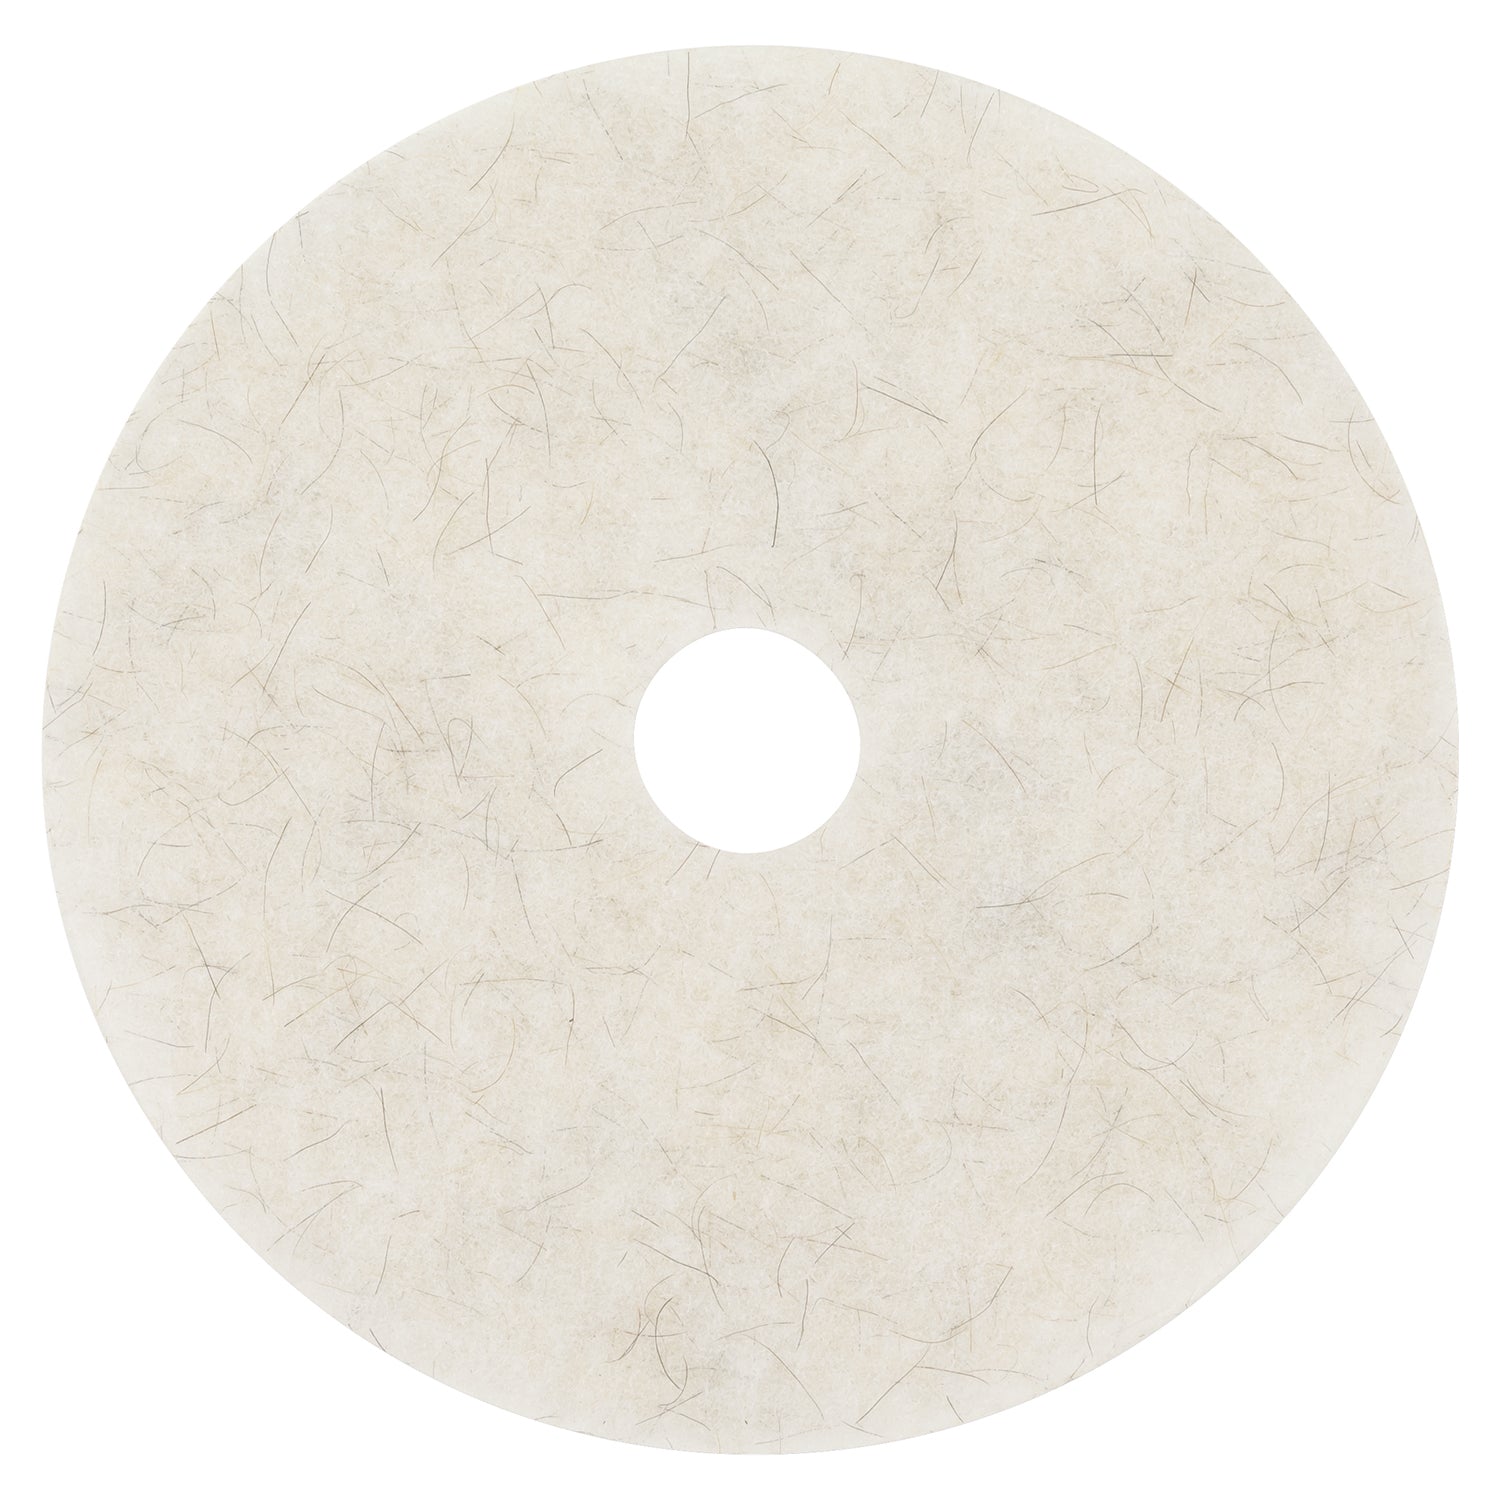 ultra-high-speed-natural-blend-floor-burnishing-pads-3300-27-diameter-white-5-carton_mmm20326 - 1